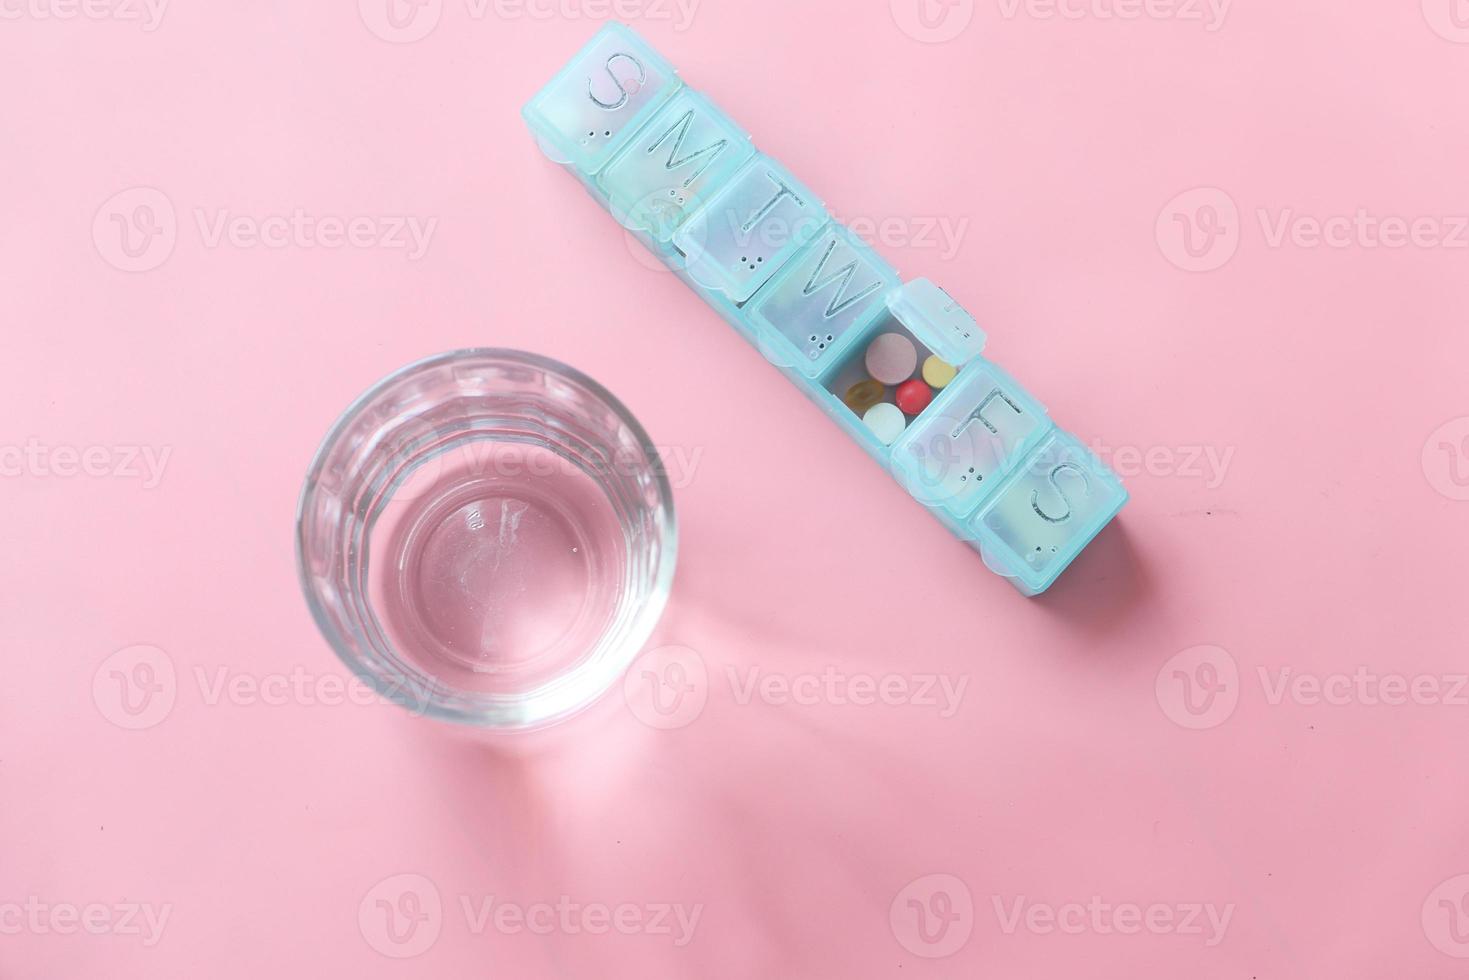 Pill box on pink background photo